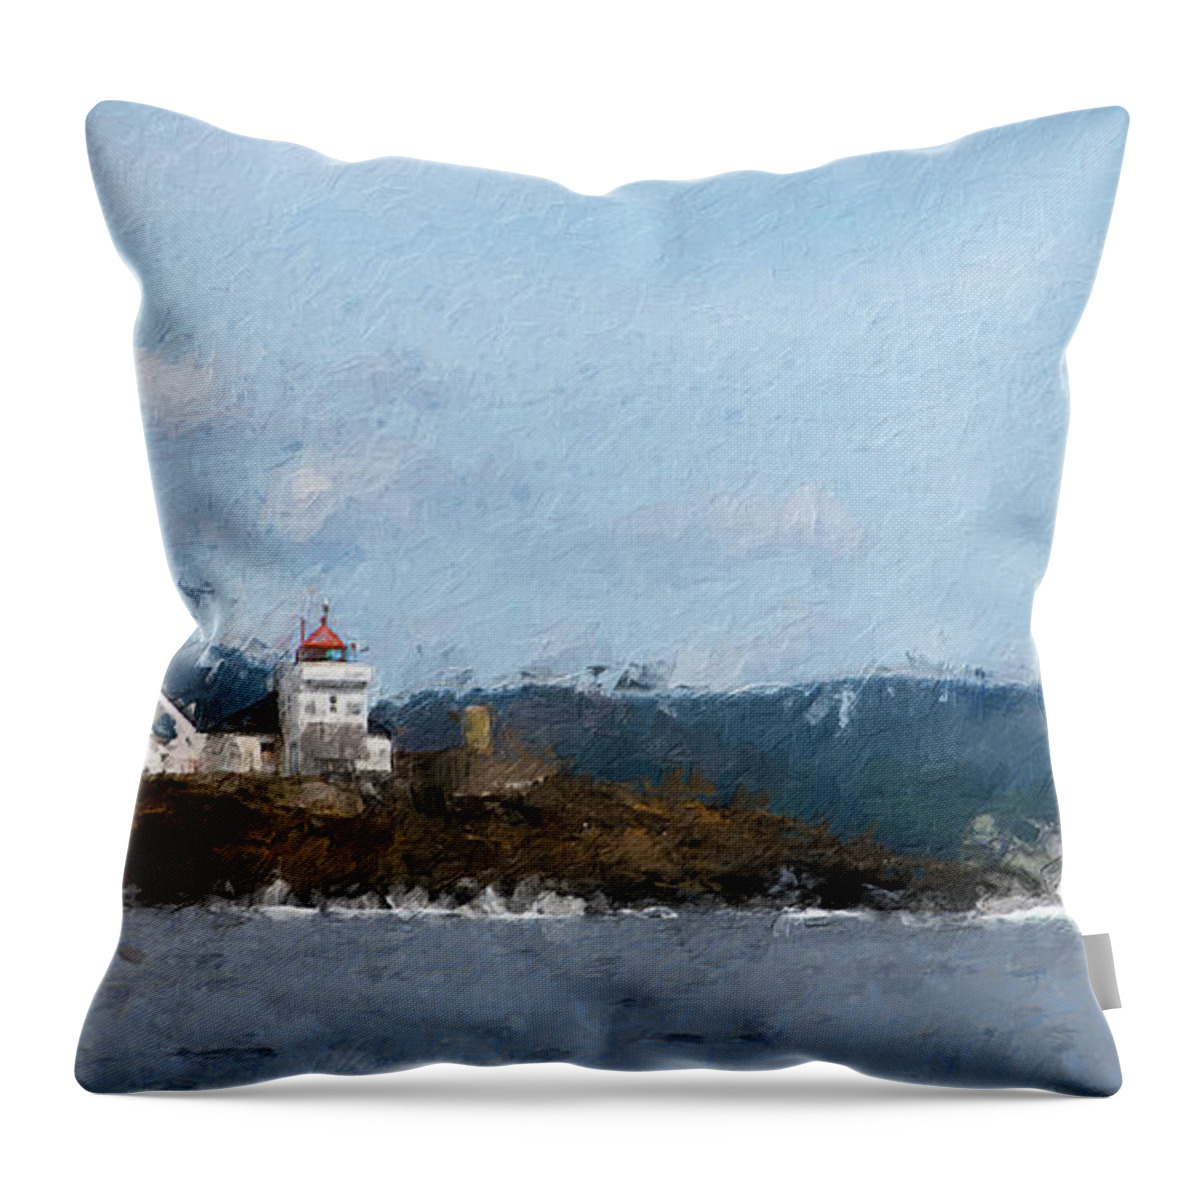 Lighthouse Throw Pillow featuring the digital art Tvistein lighthouse by Geir Rosset